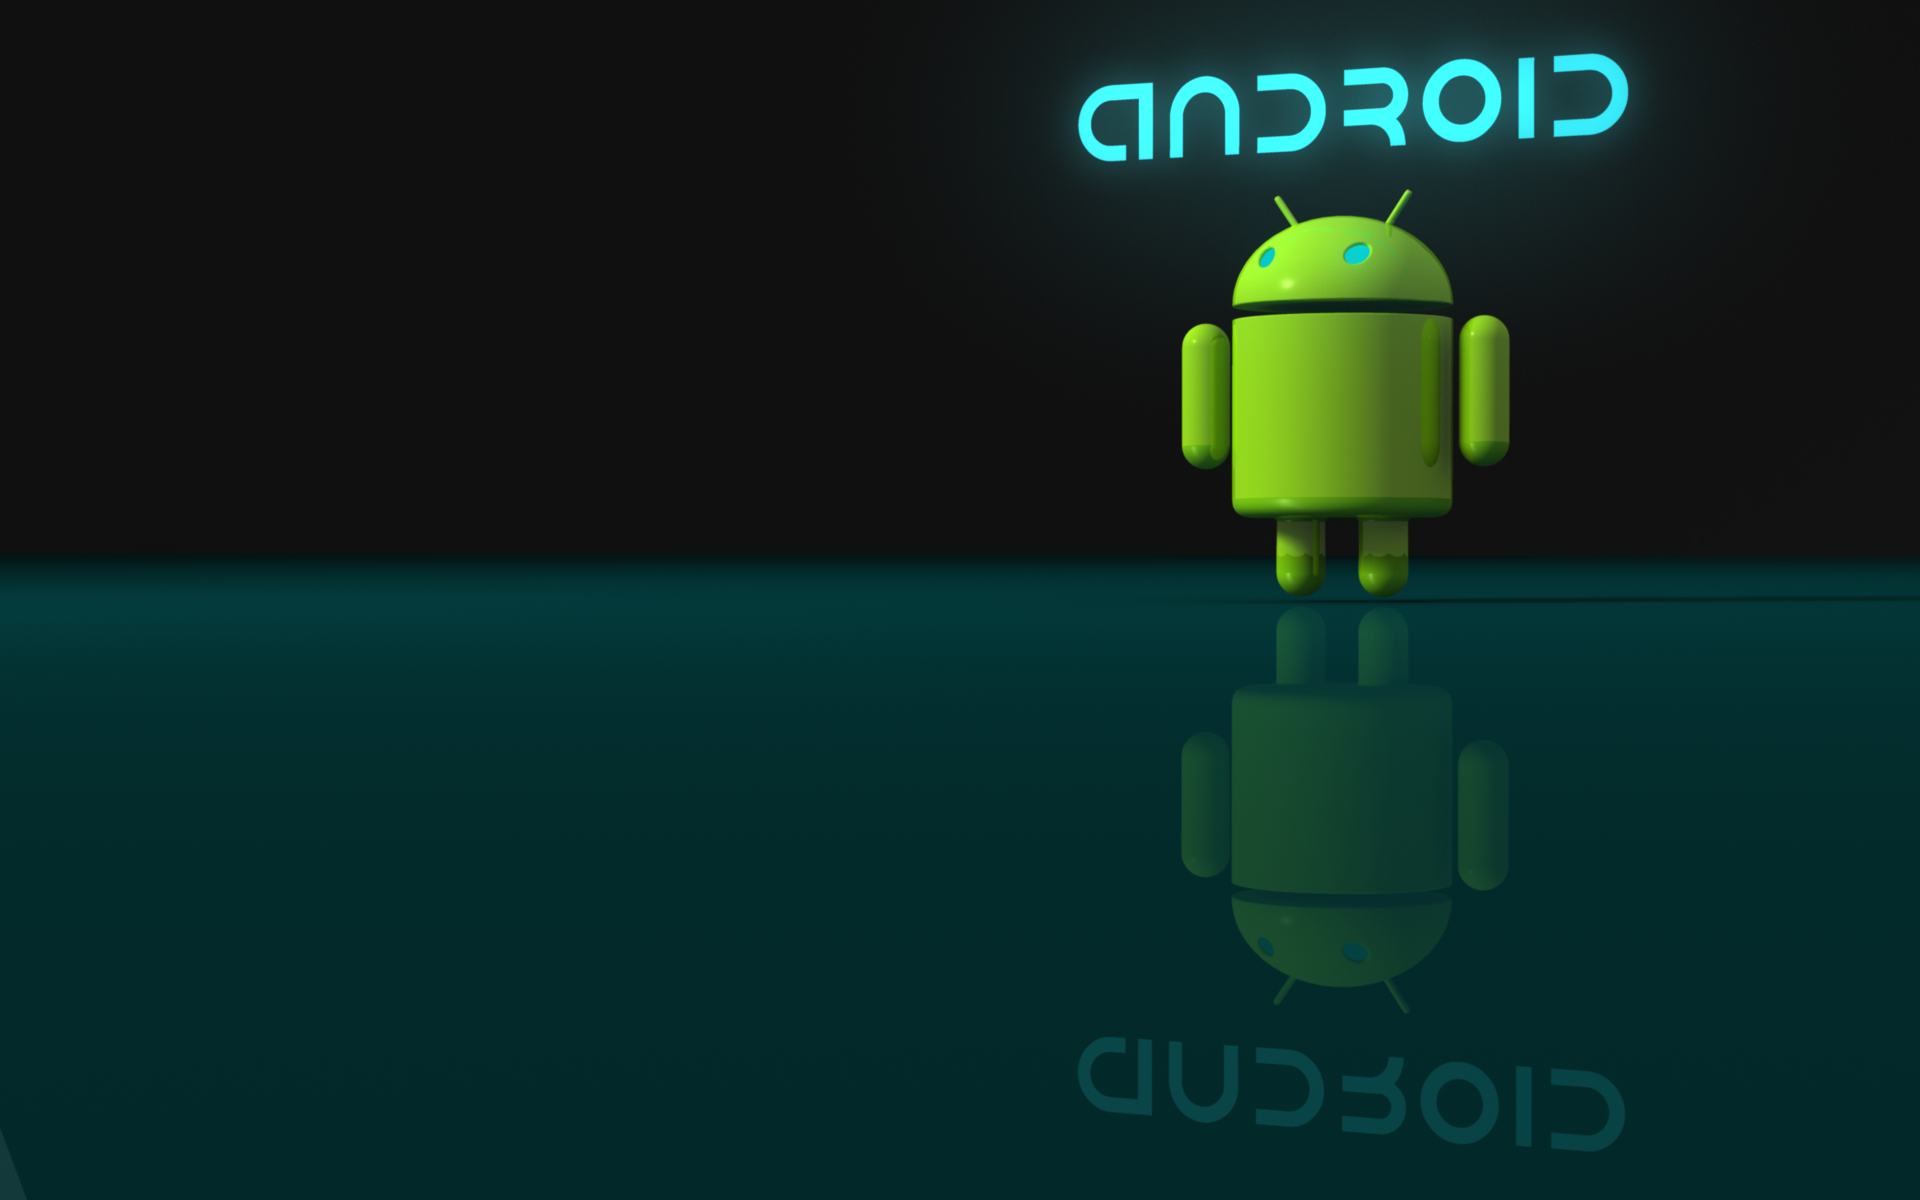 Wallpaper 3d Android Logo Image Num 23